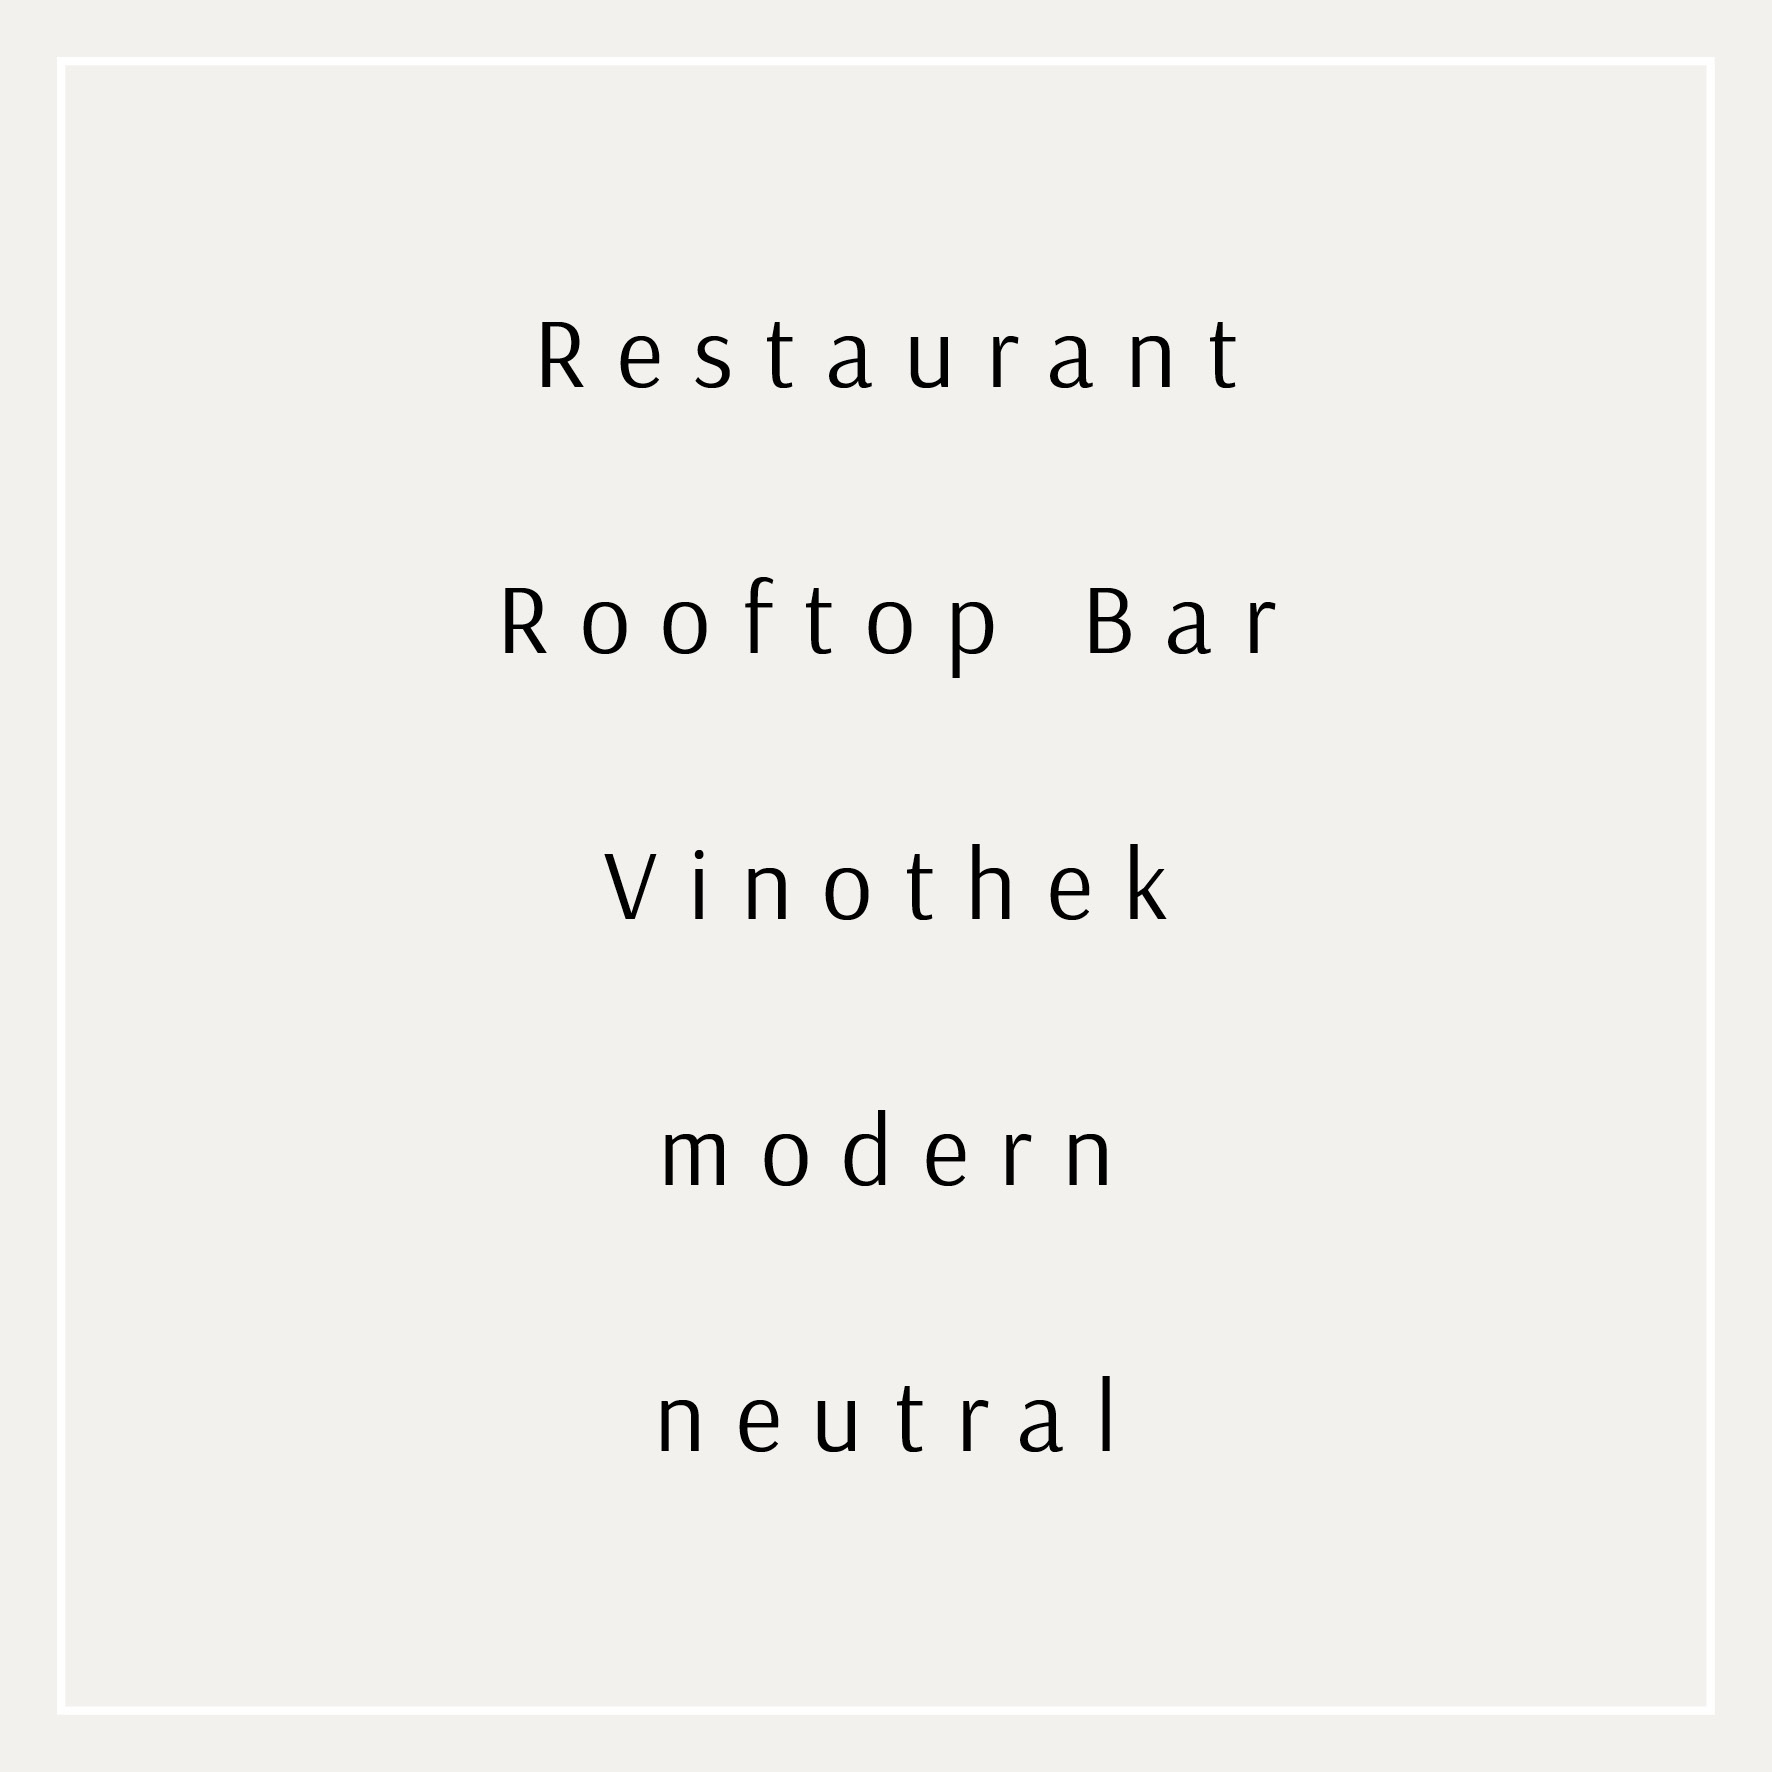 Restaurant, Rooftop Bar, Vinothek